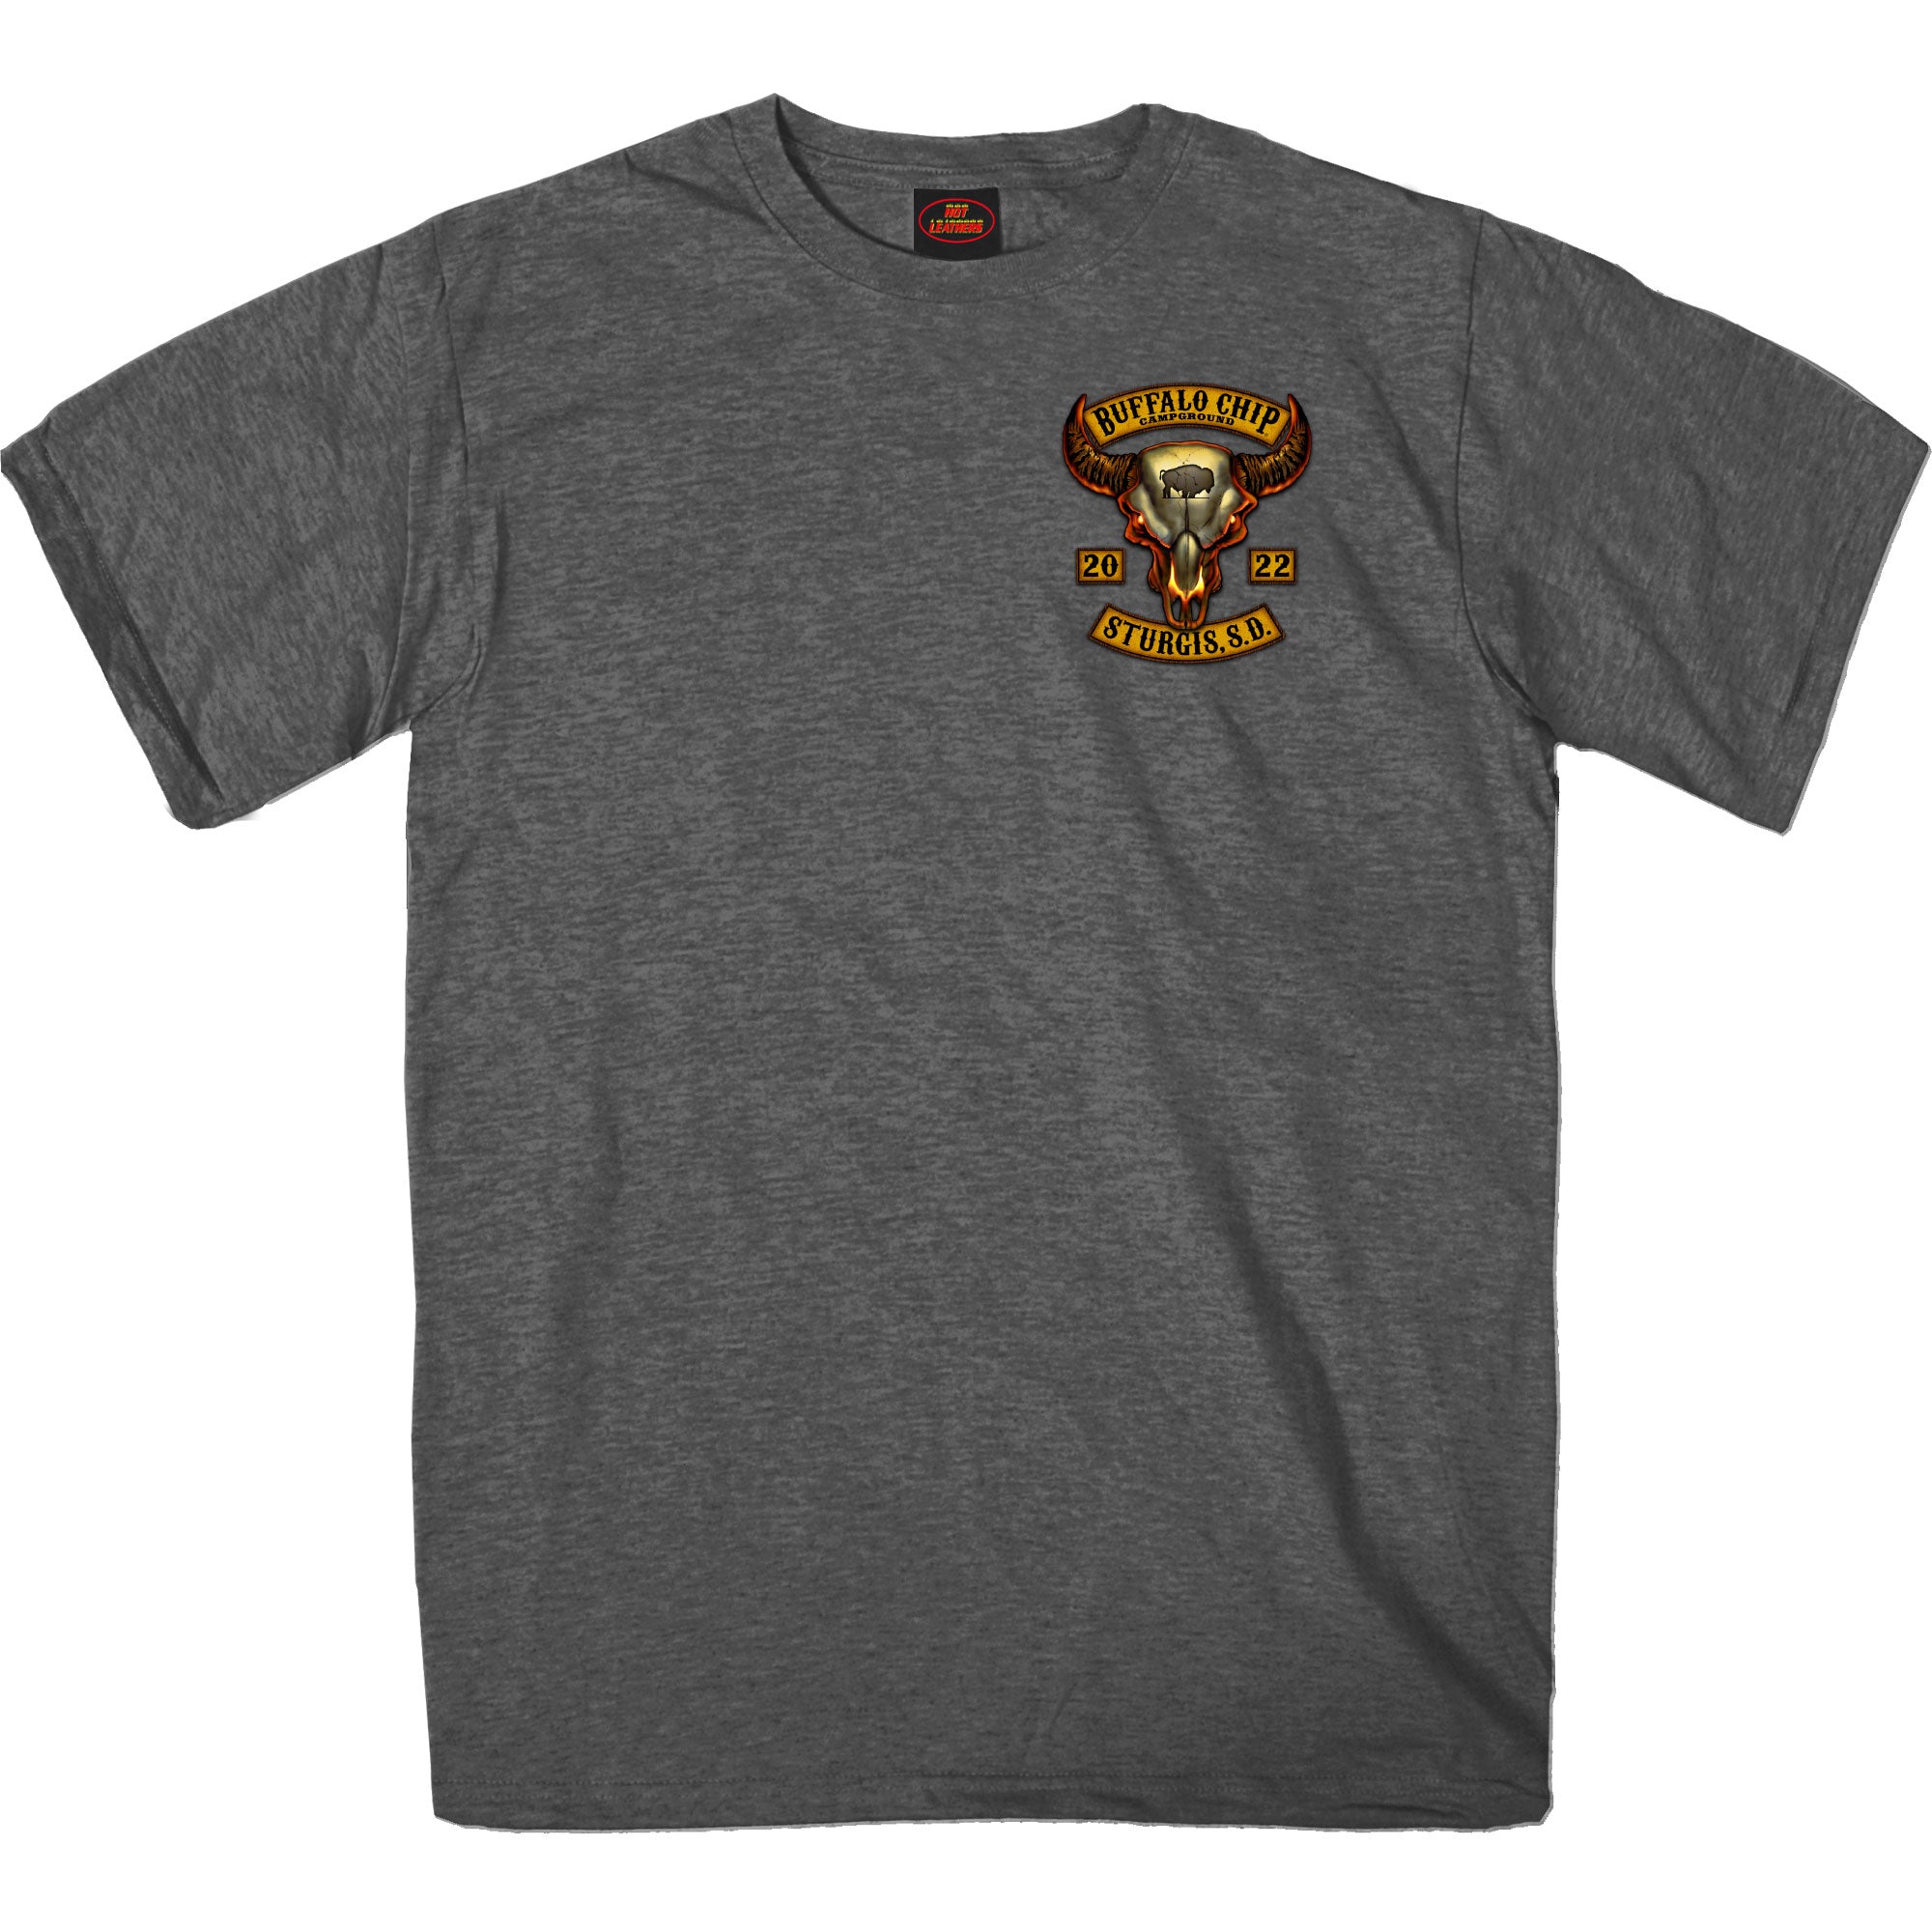 Sturgis Buffalo Chip 2022 Rocker Design Charcoal T-Shirt